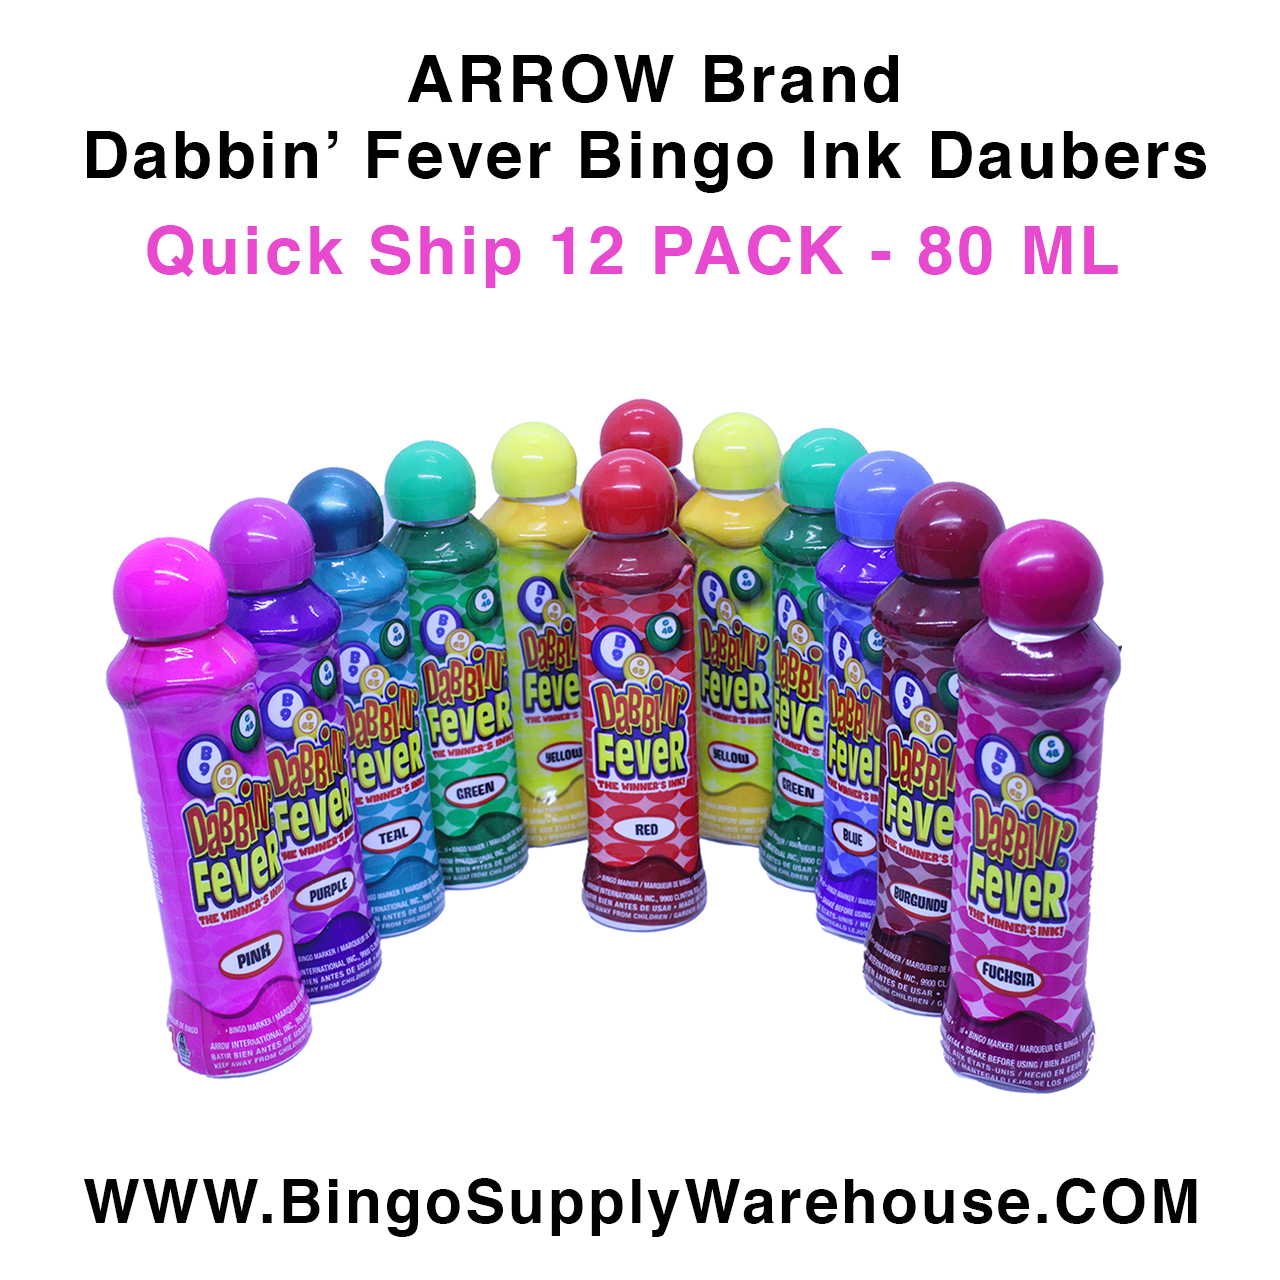 Dab-O-Ink Bingo Daubers - Bingo Supply Warehouse